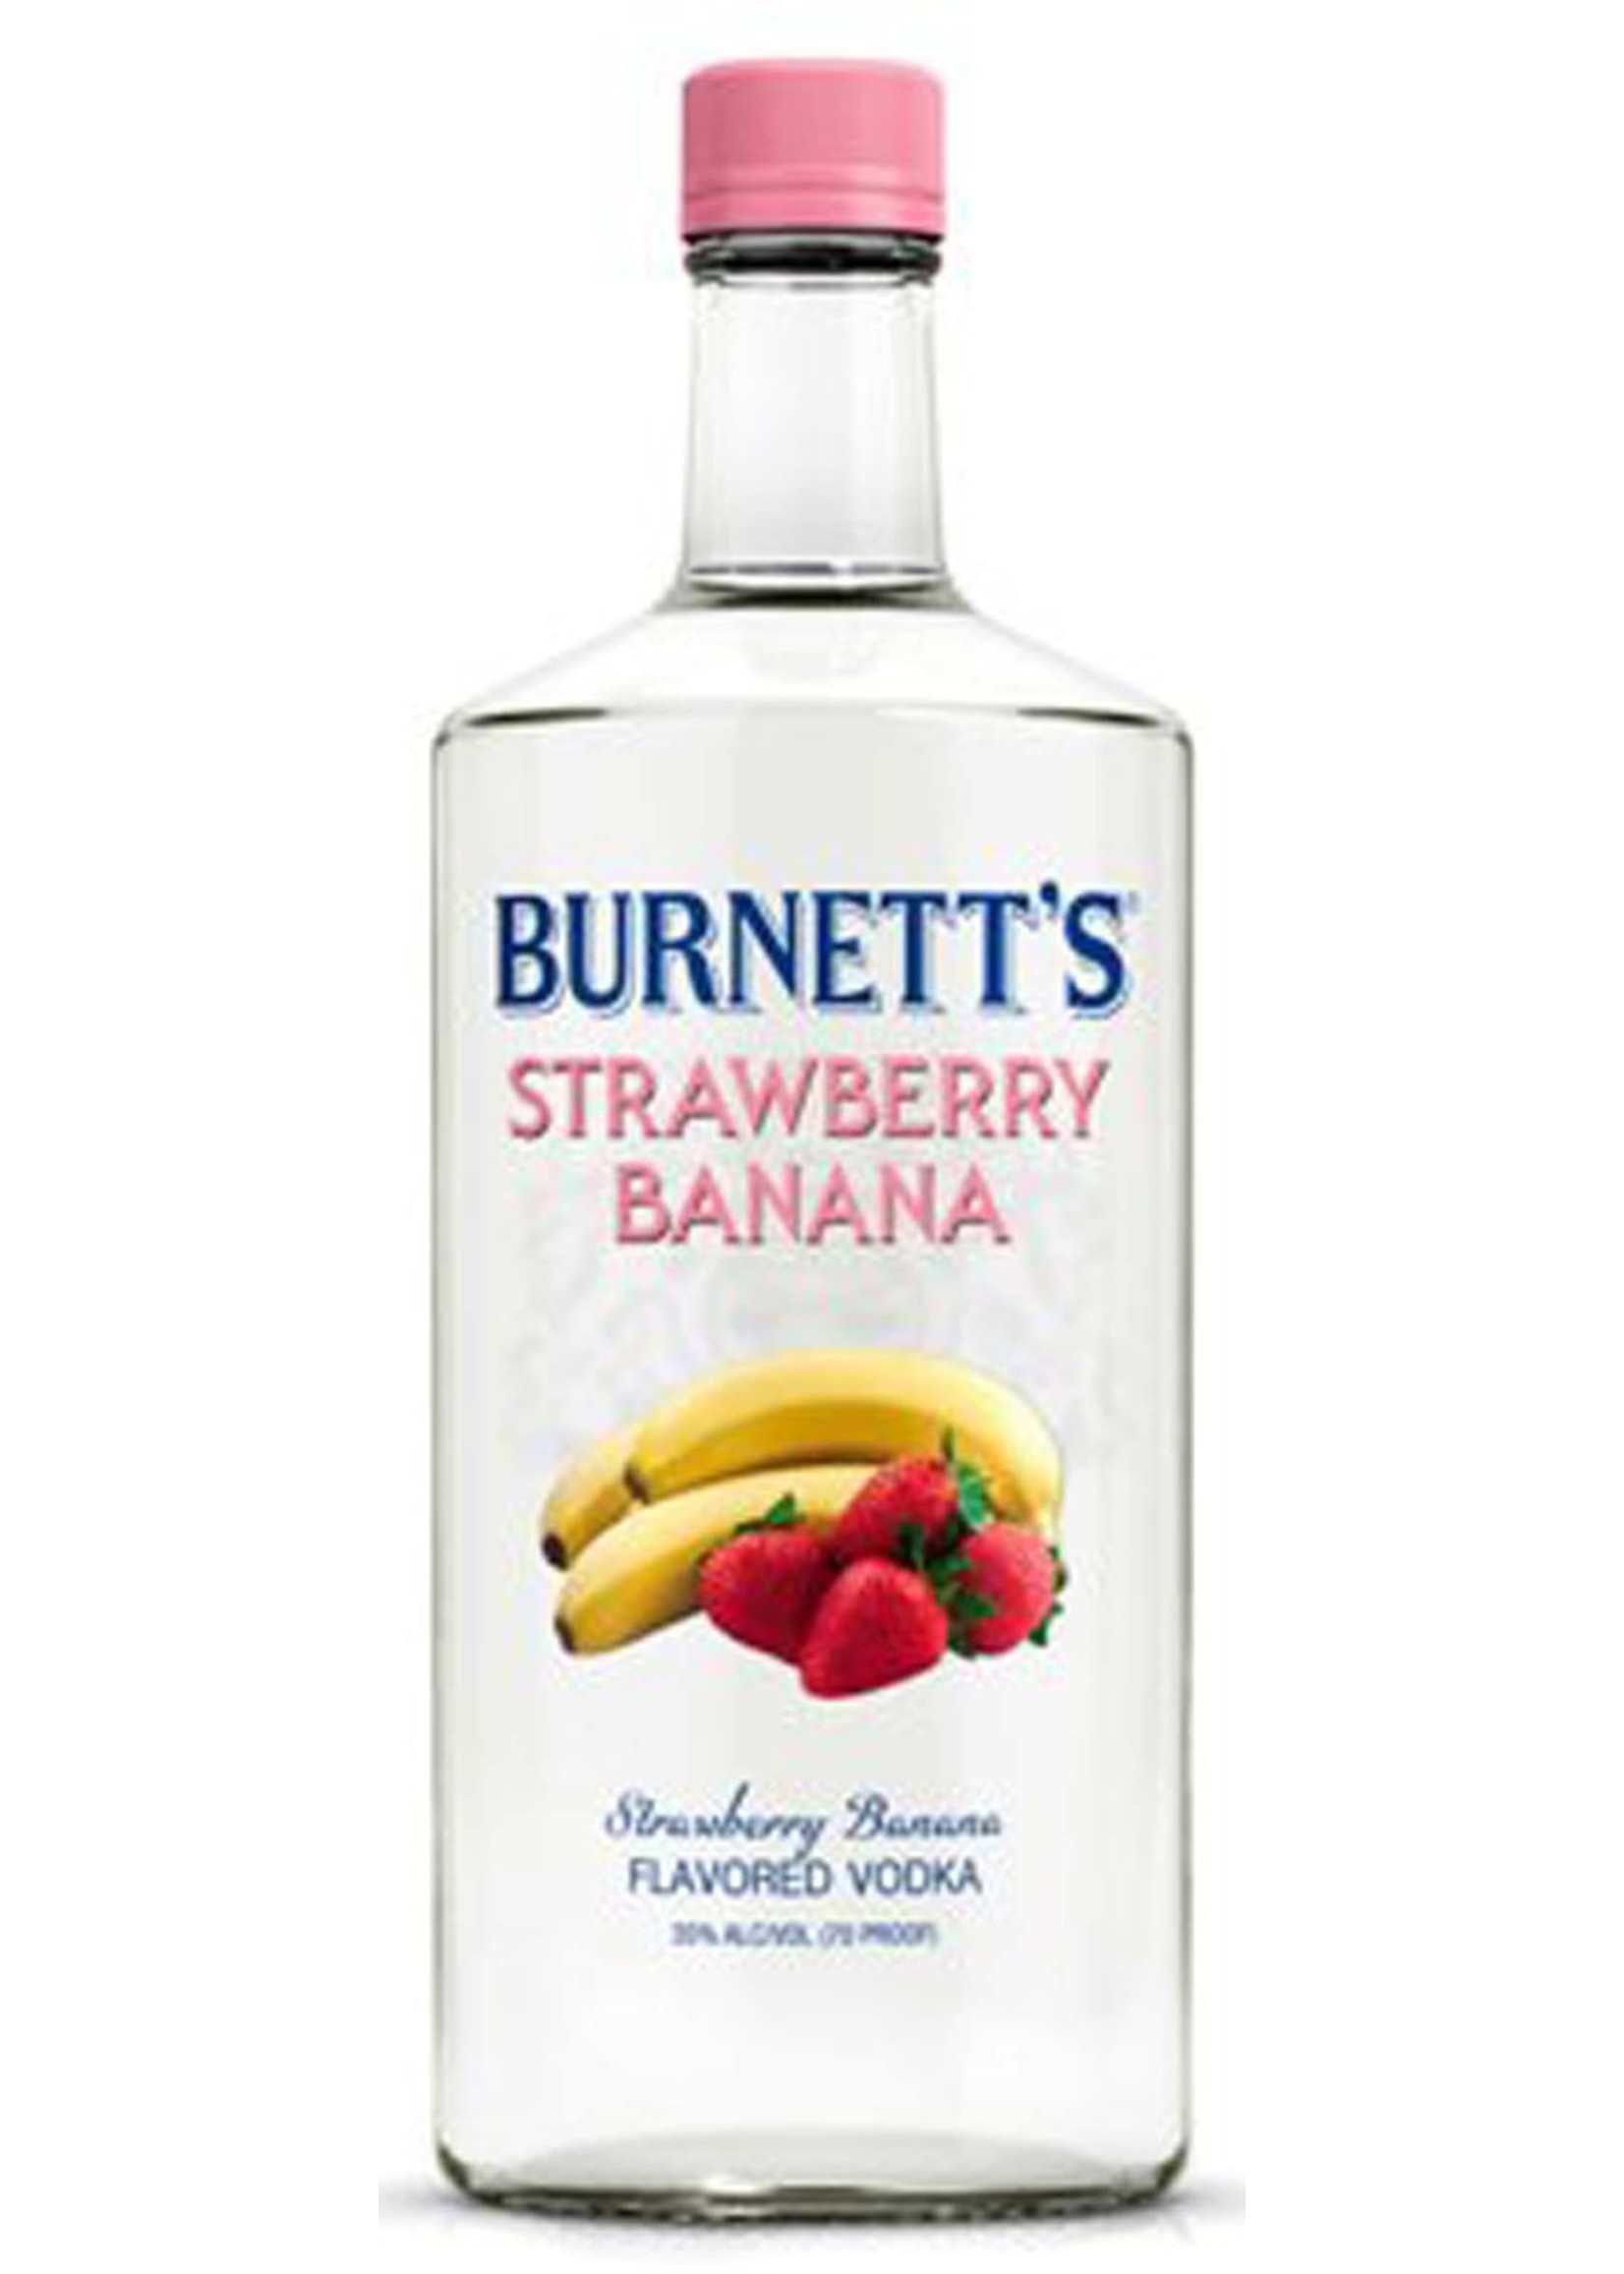 Burnetts Strawberry Banana Flavored Vodka 60Proof Pet 1.75 Ltr